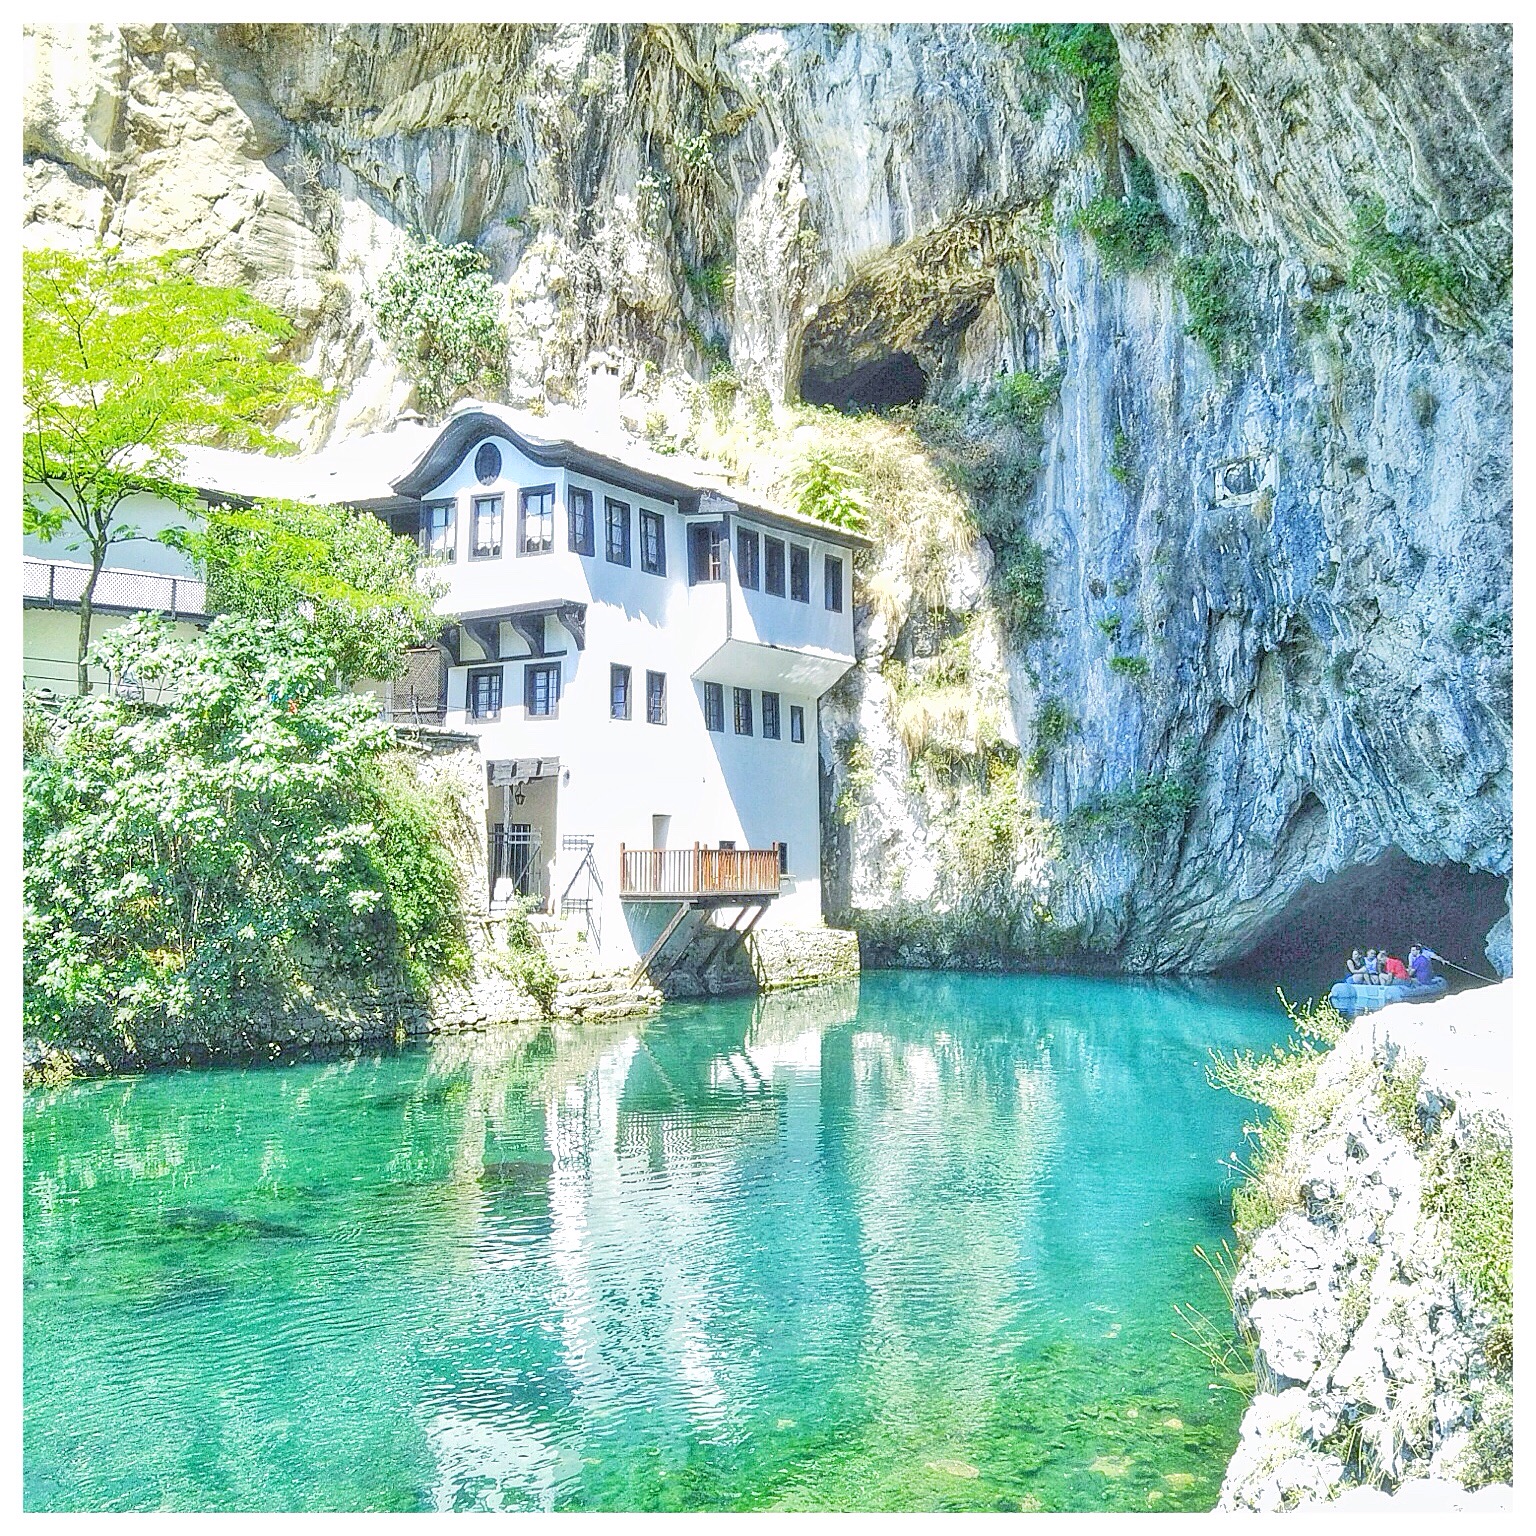 Blagaj Bosnia Instagrammable - Enjoy the Adventure Travel Blog